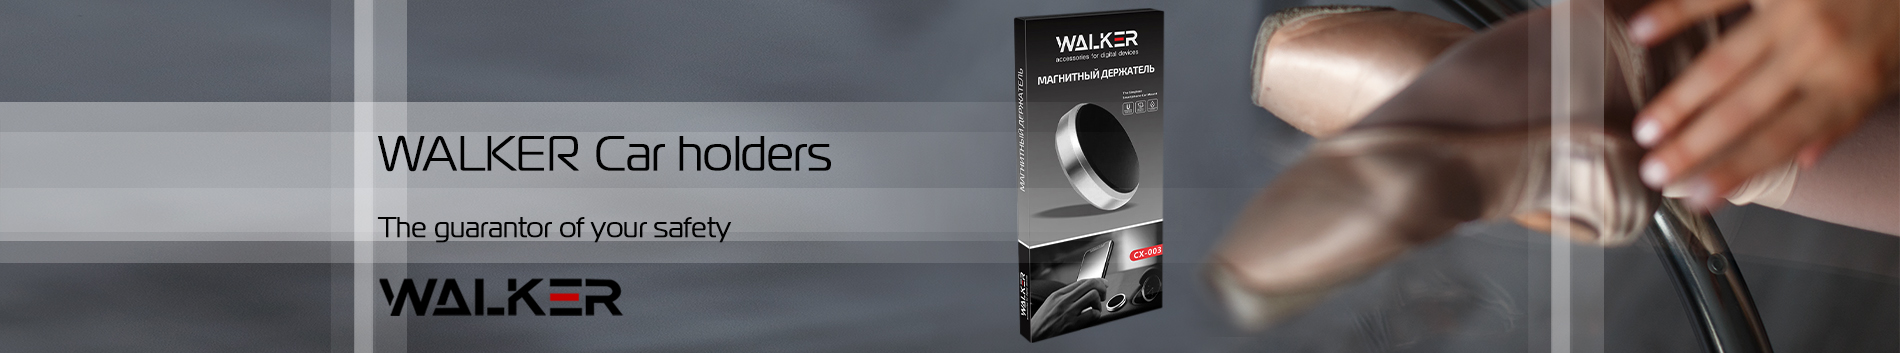 WALKER Car holders